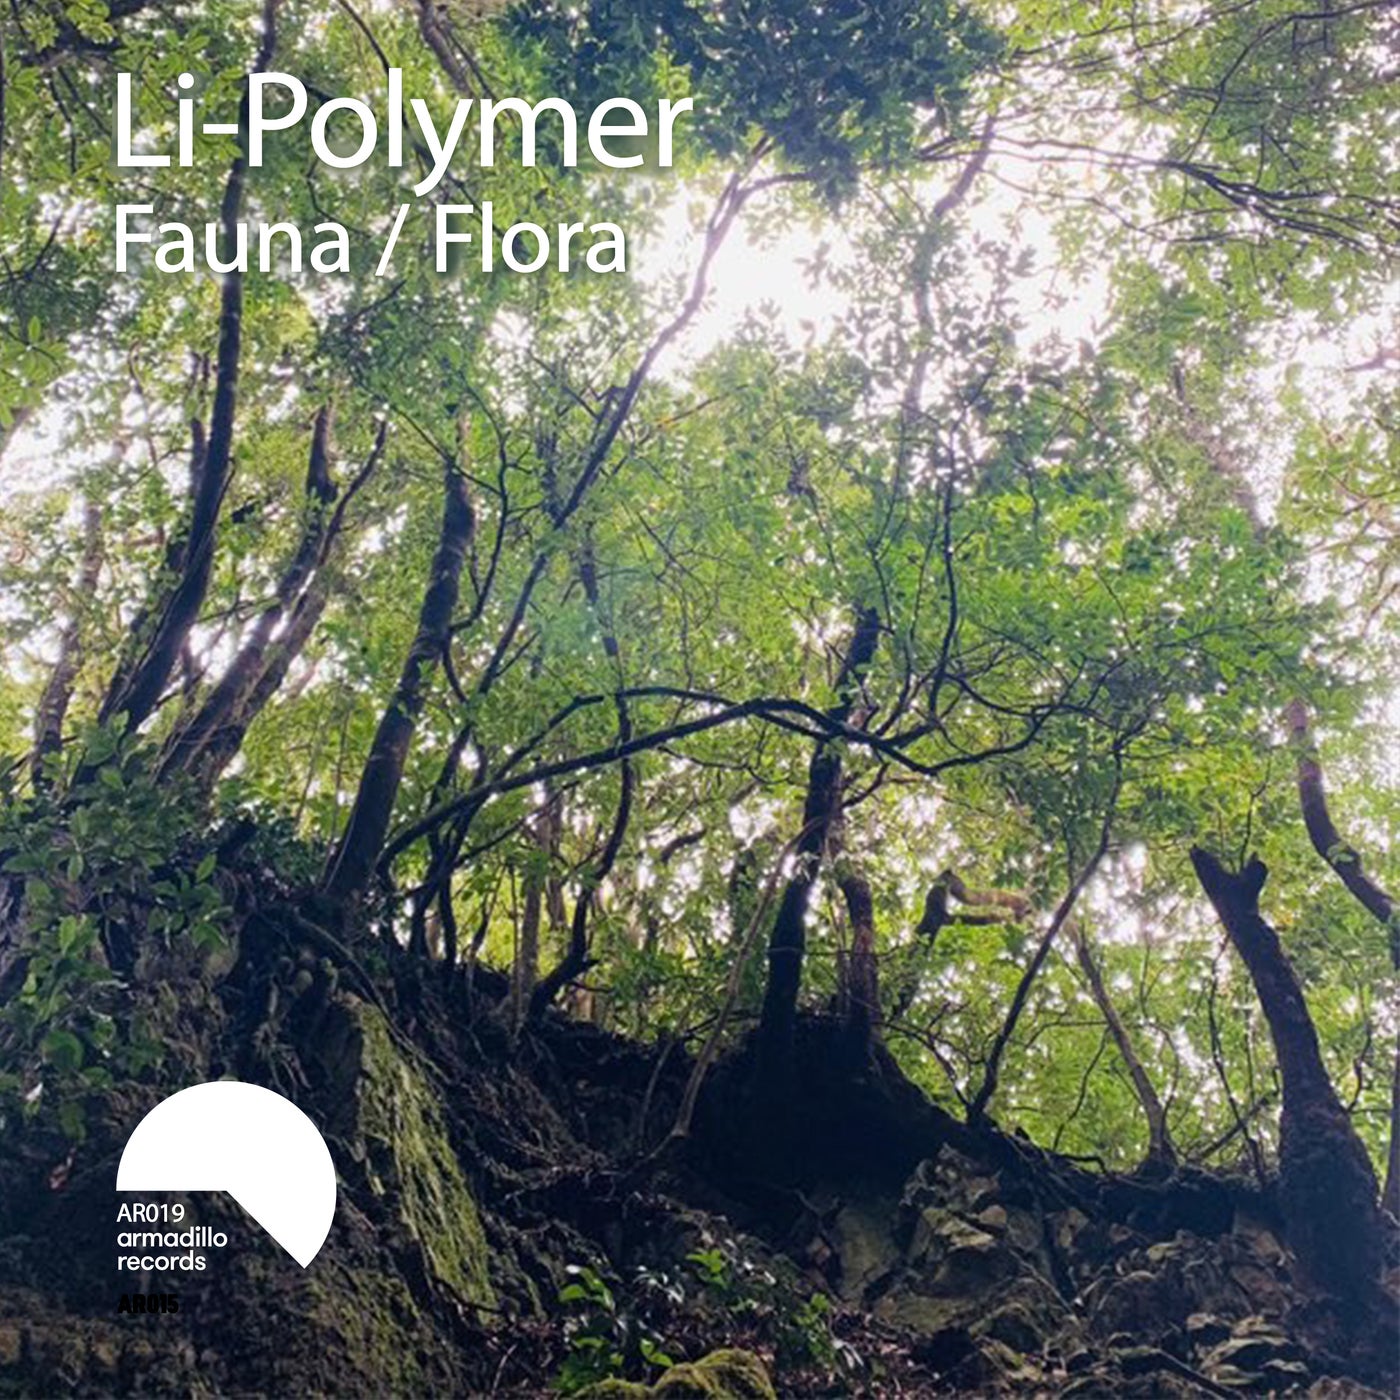 Li-Polymer - Fauna / Flora [AR019]